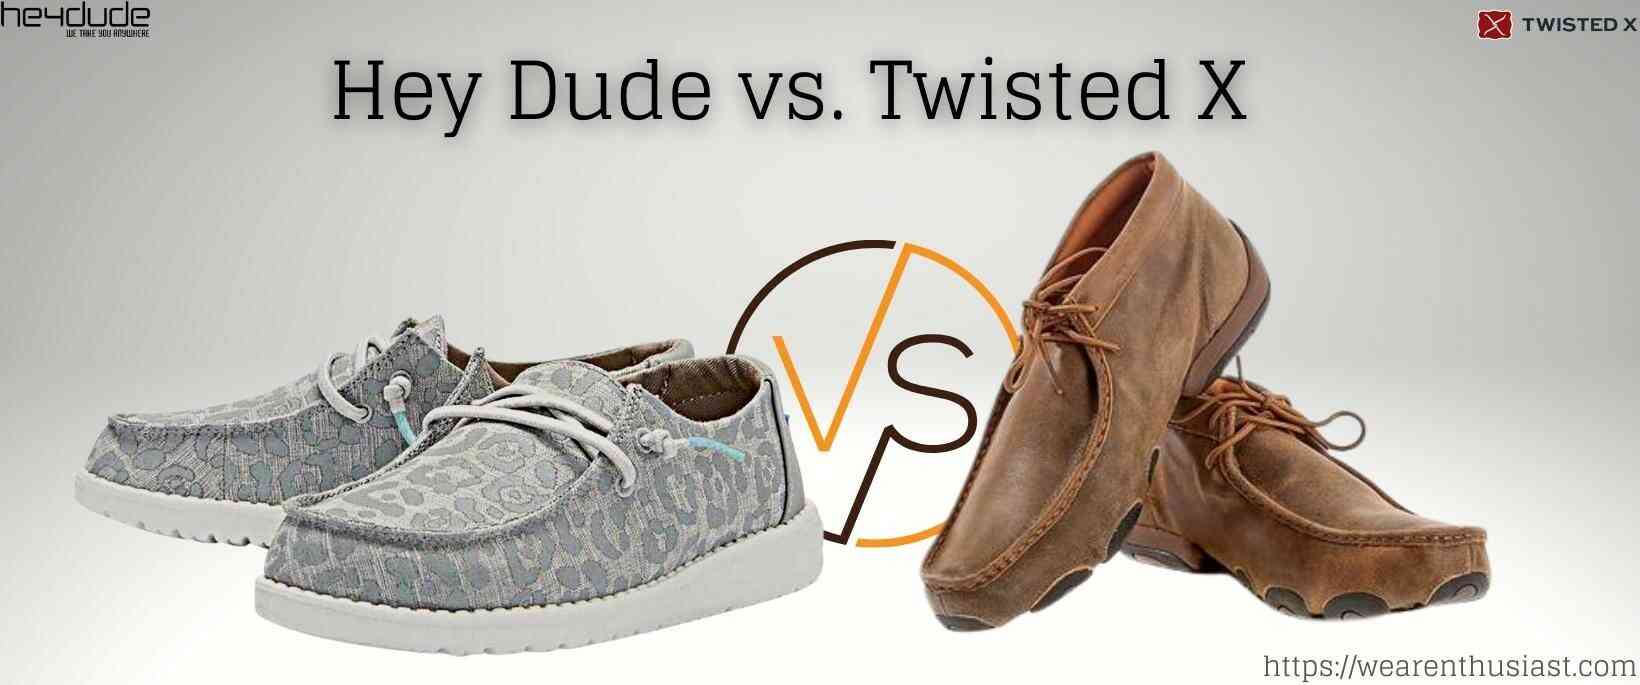 Hey Dude vs. Twisted X